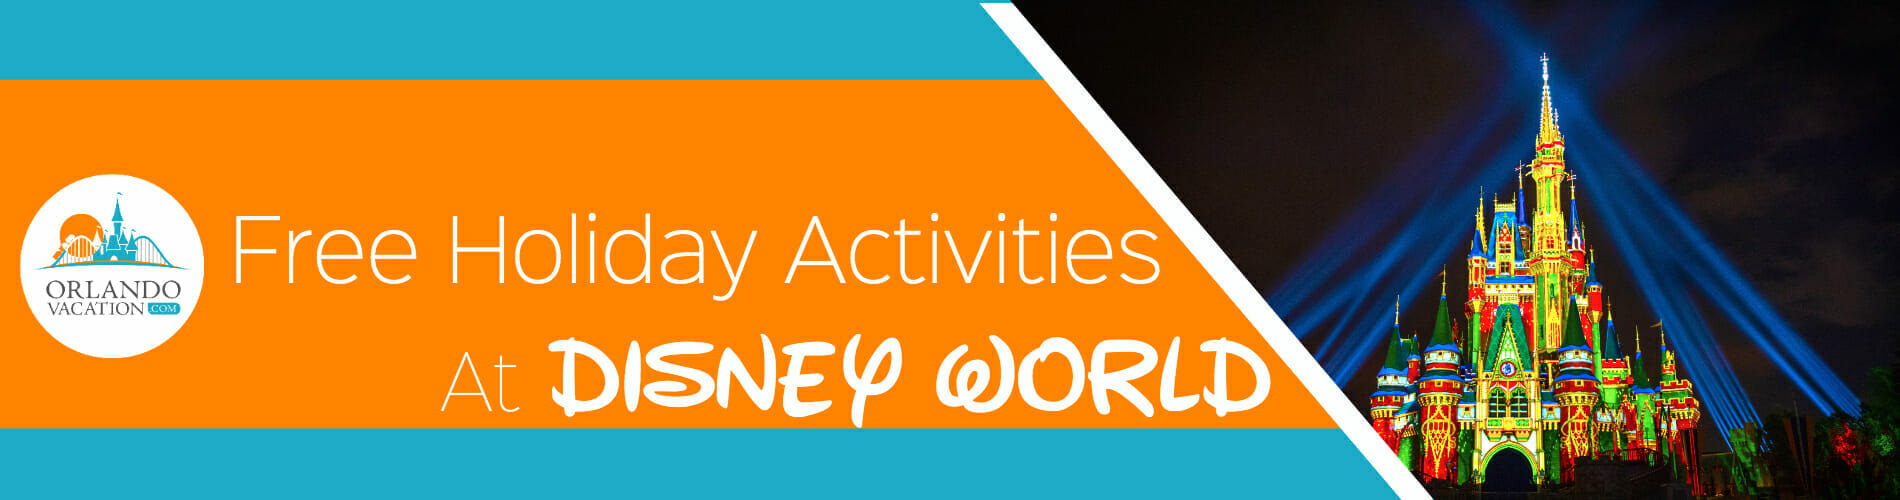 Free Holiday Activities at Disney World